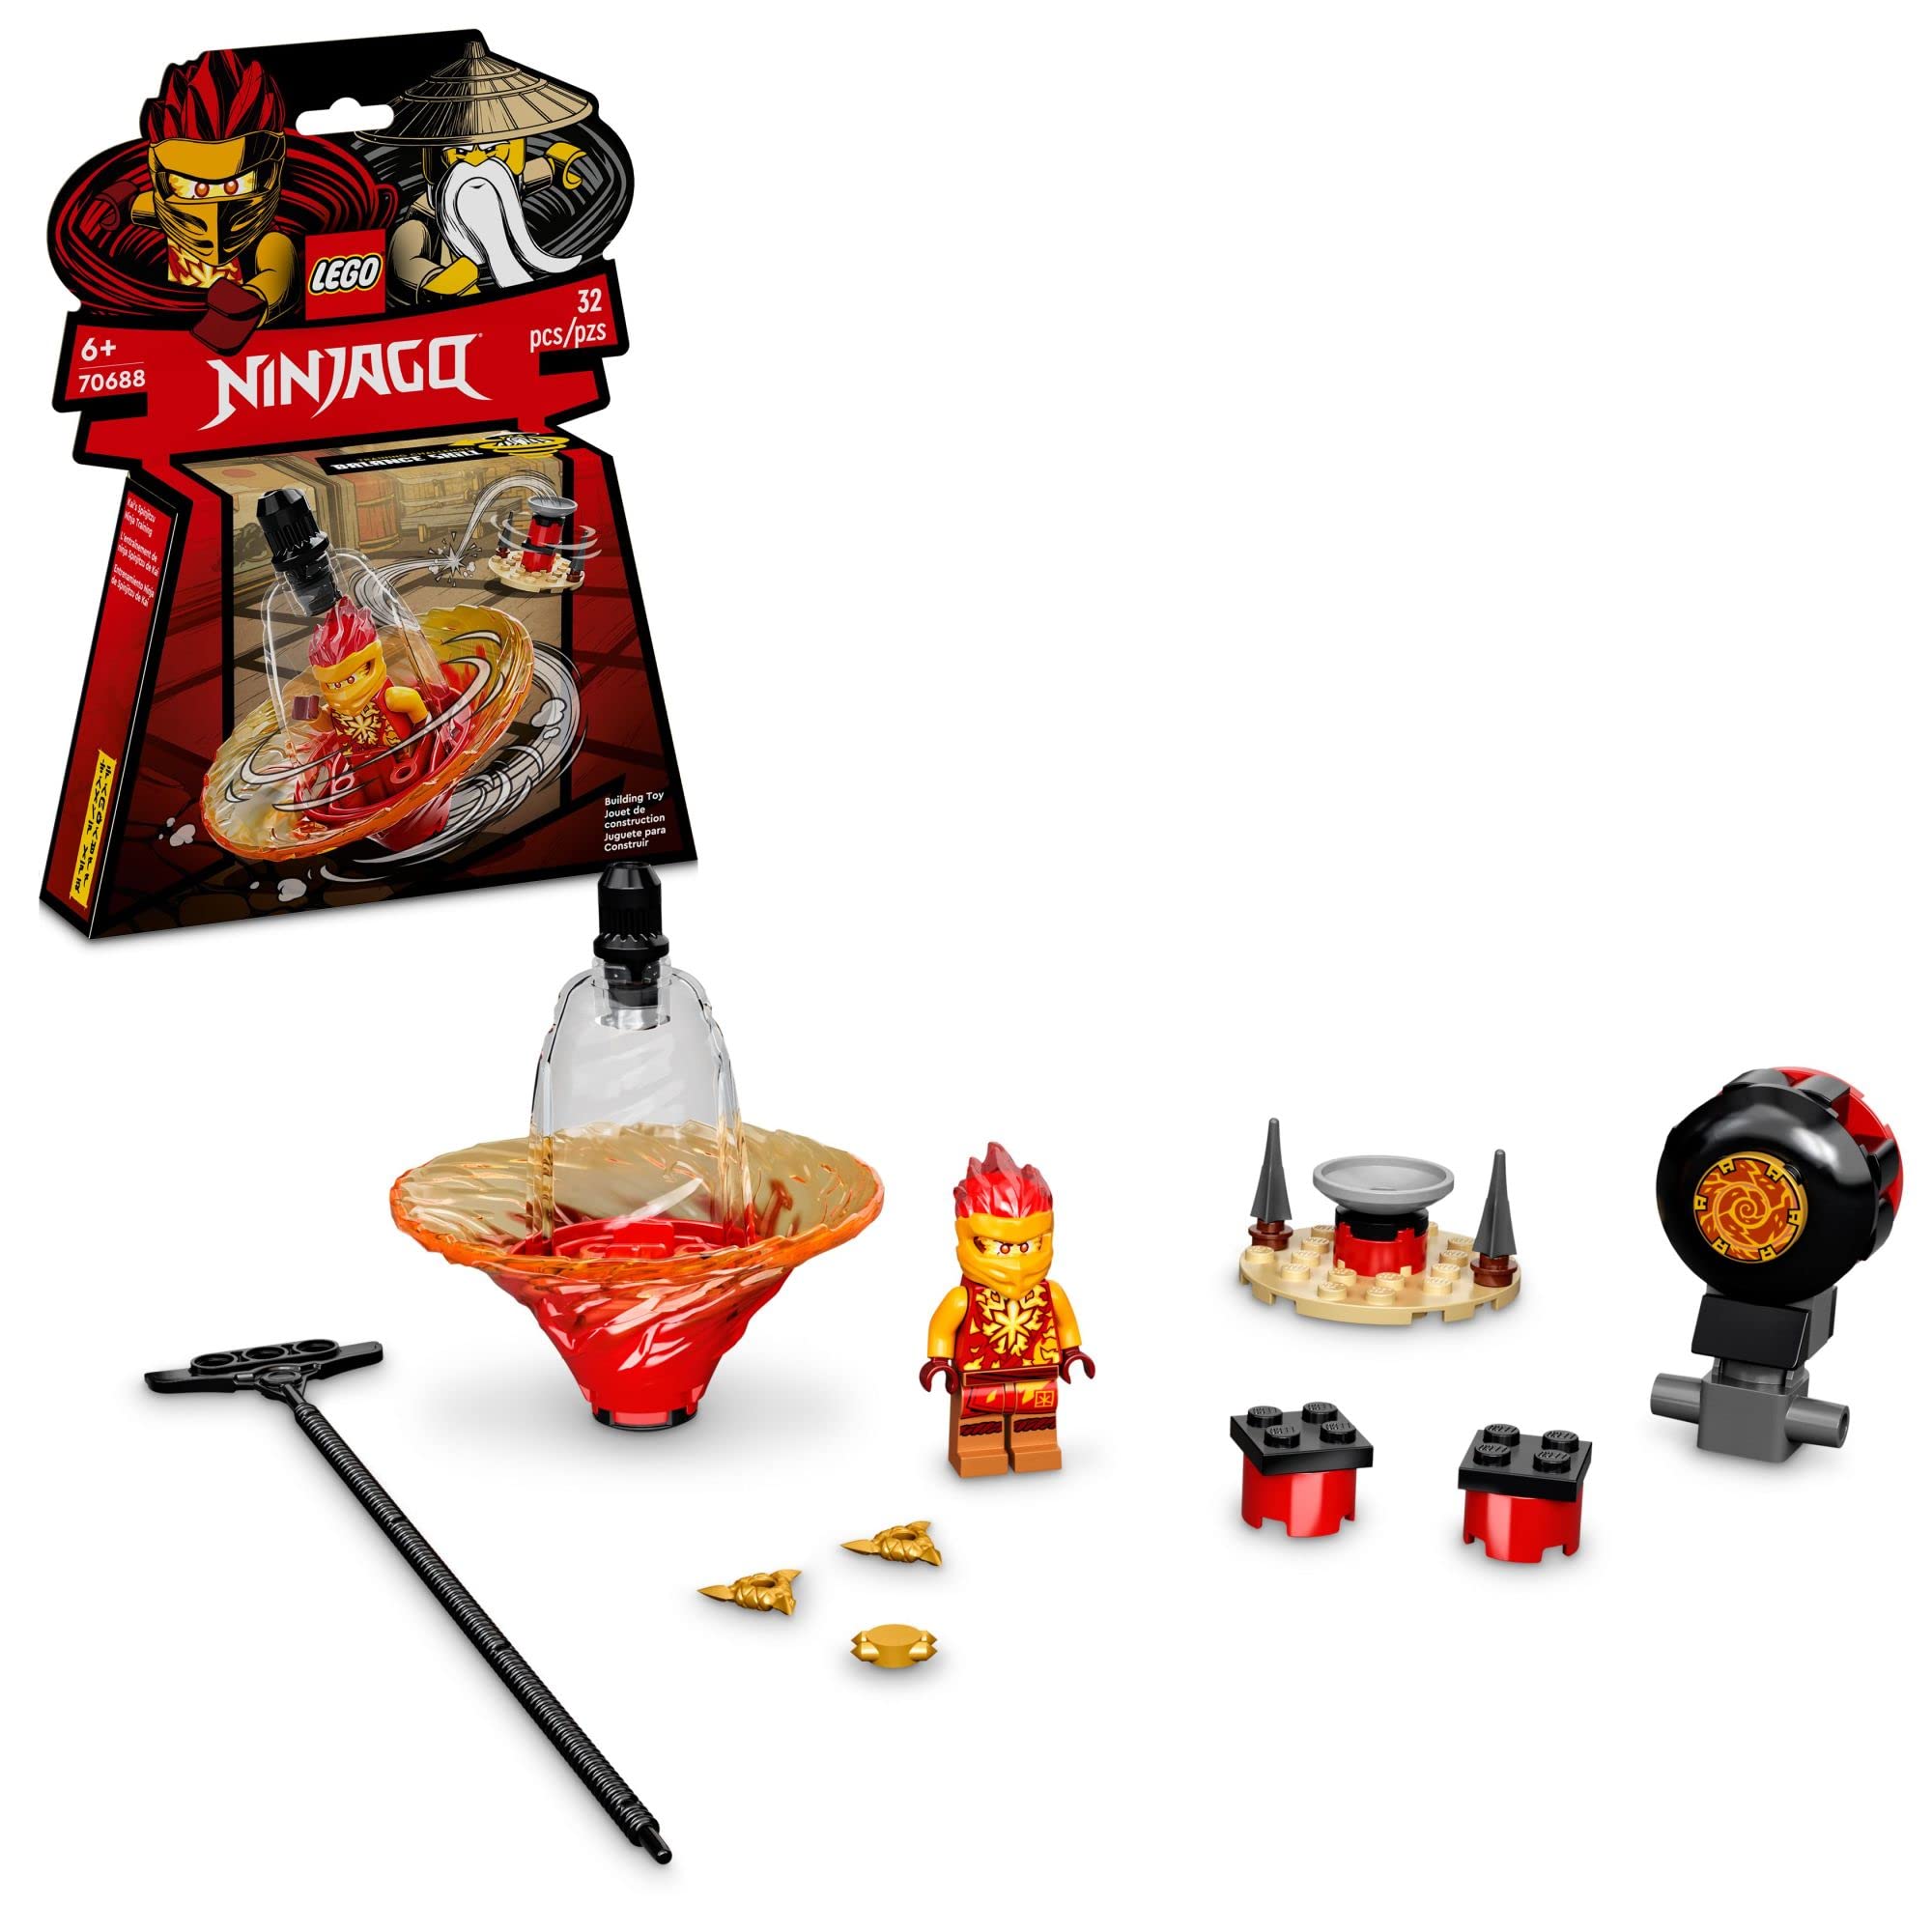 LEGO NINJAGO Kai’s Spinjitzu Ninja Training 70688 Spinning Toy Building Kit with NINJAGO Kai; Gift for Kids Aged 6+ (32 Pieces)